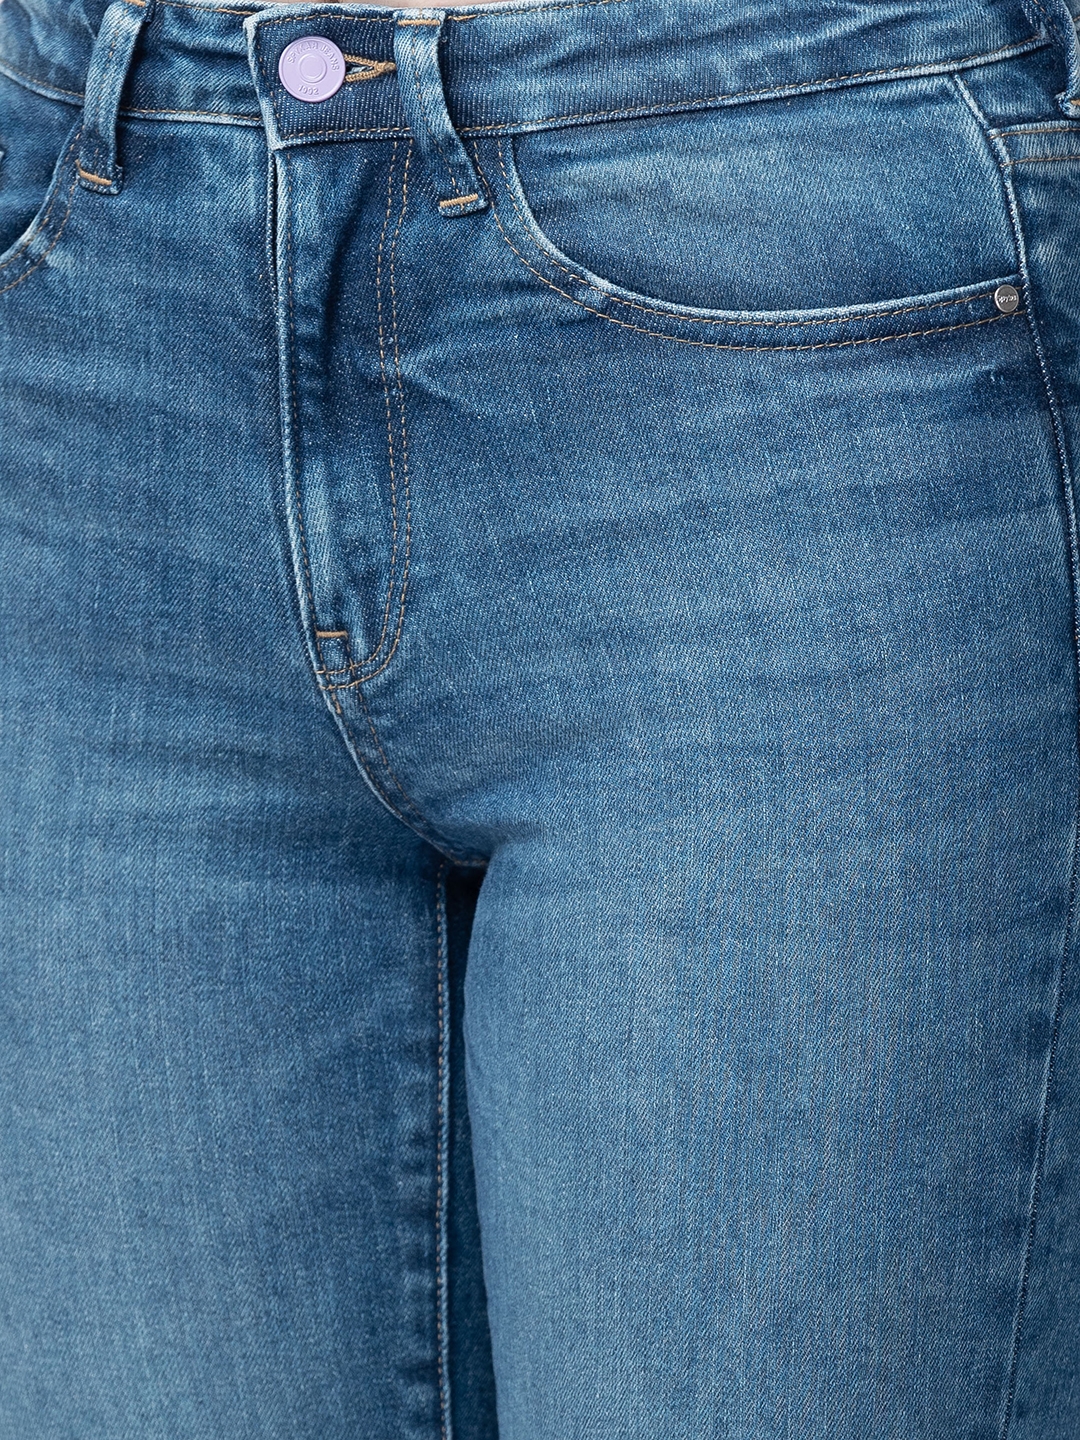 spykar | Women's Blue Cotton Solid Jeans 4